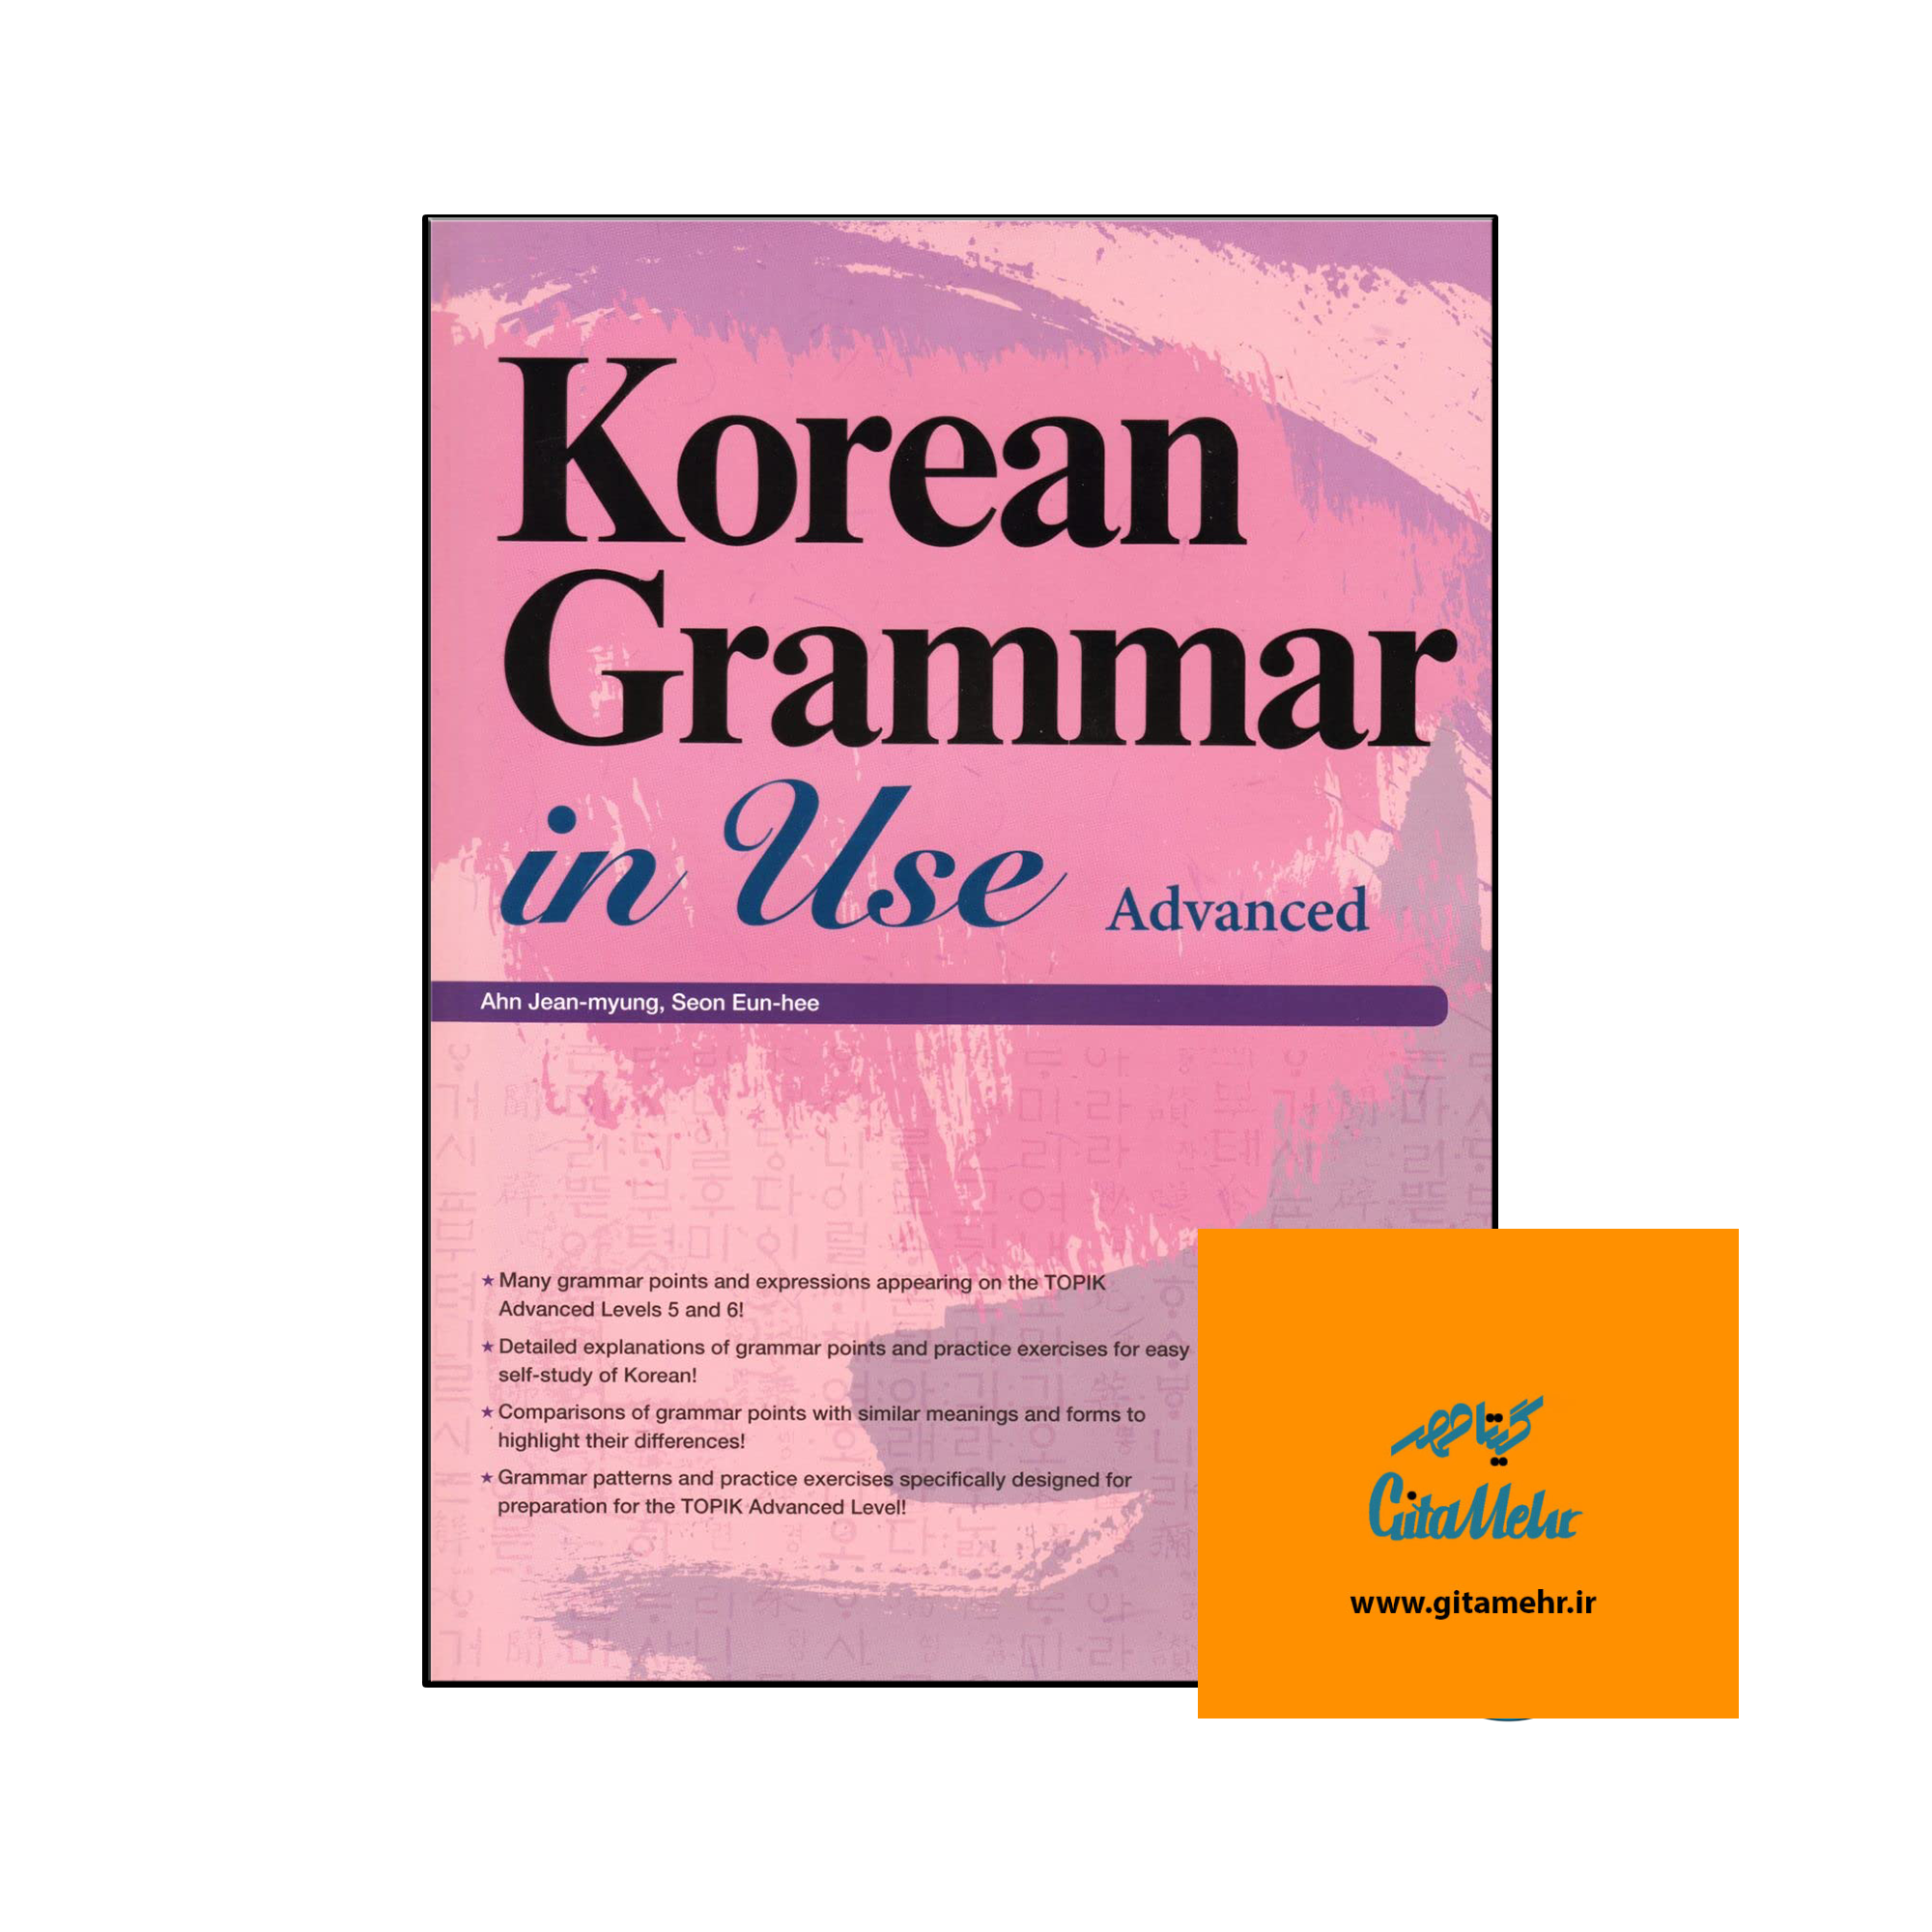 daa9d8aad8a7d8a8 korean grammar in use advanced da86d8a7d9be d8b1d986daafdb8c 65eee506b4e2f